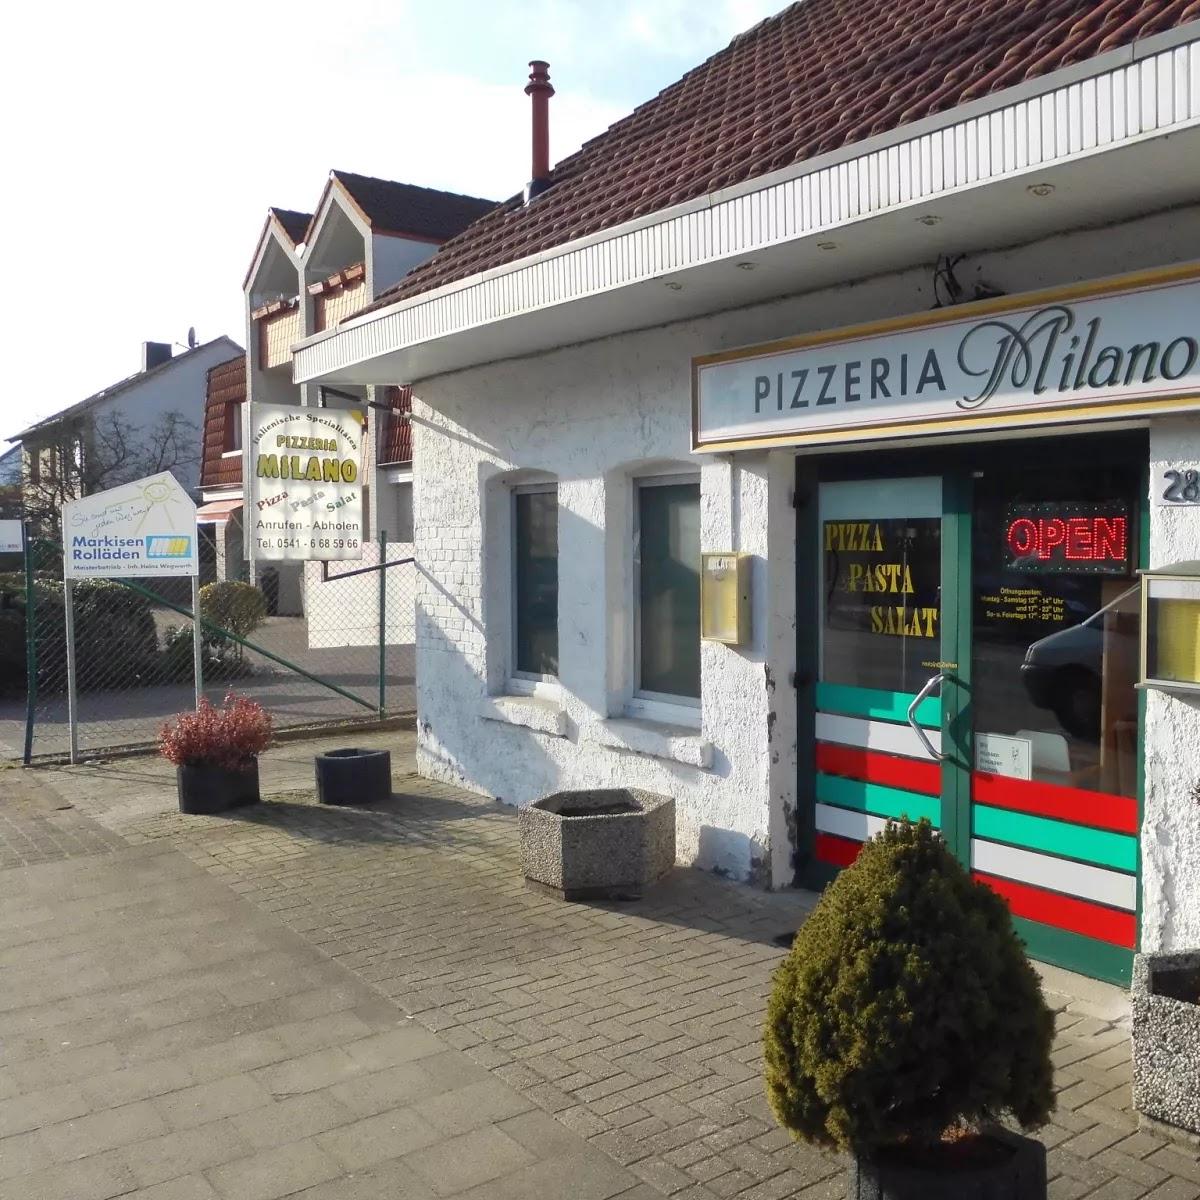 Restaurant "Pizzeria Milano" in Osnabrück